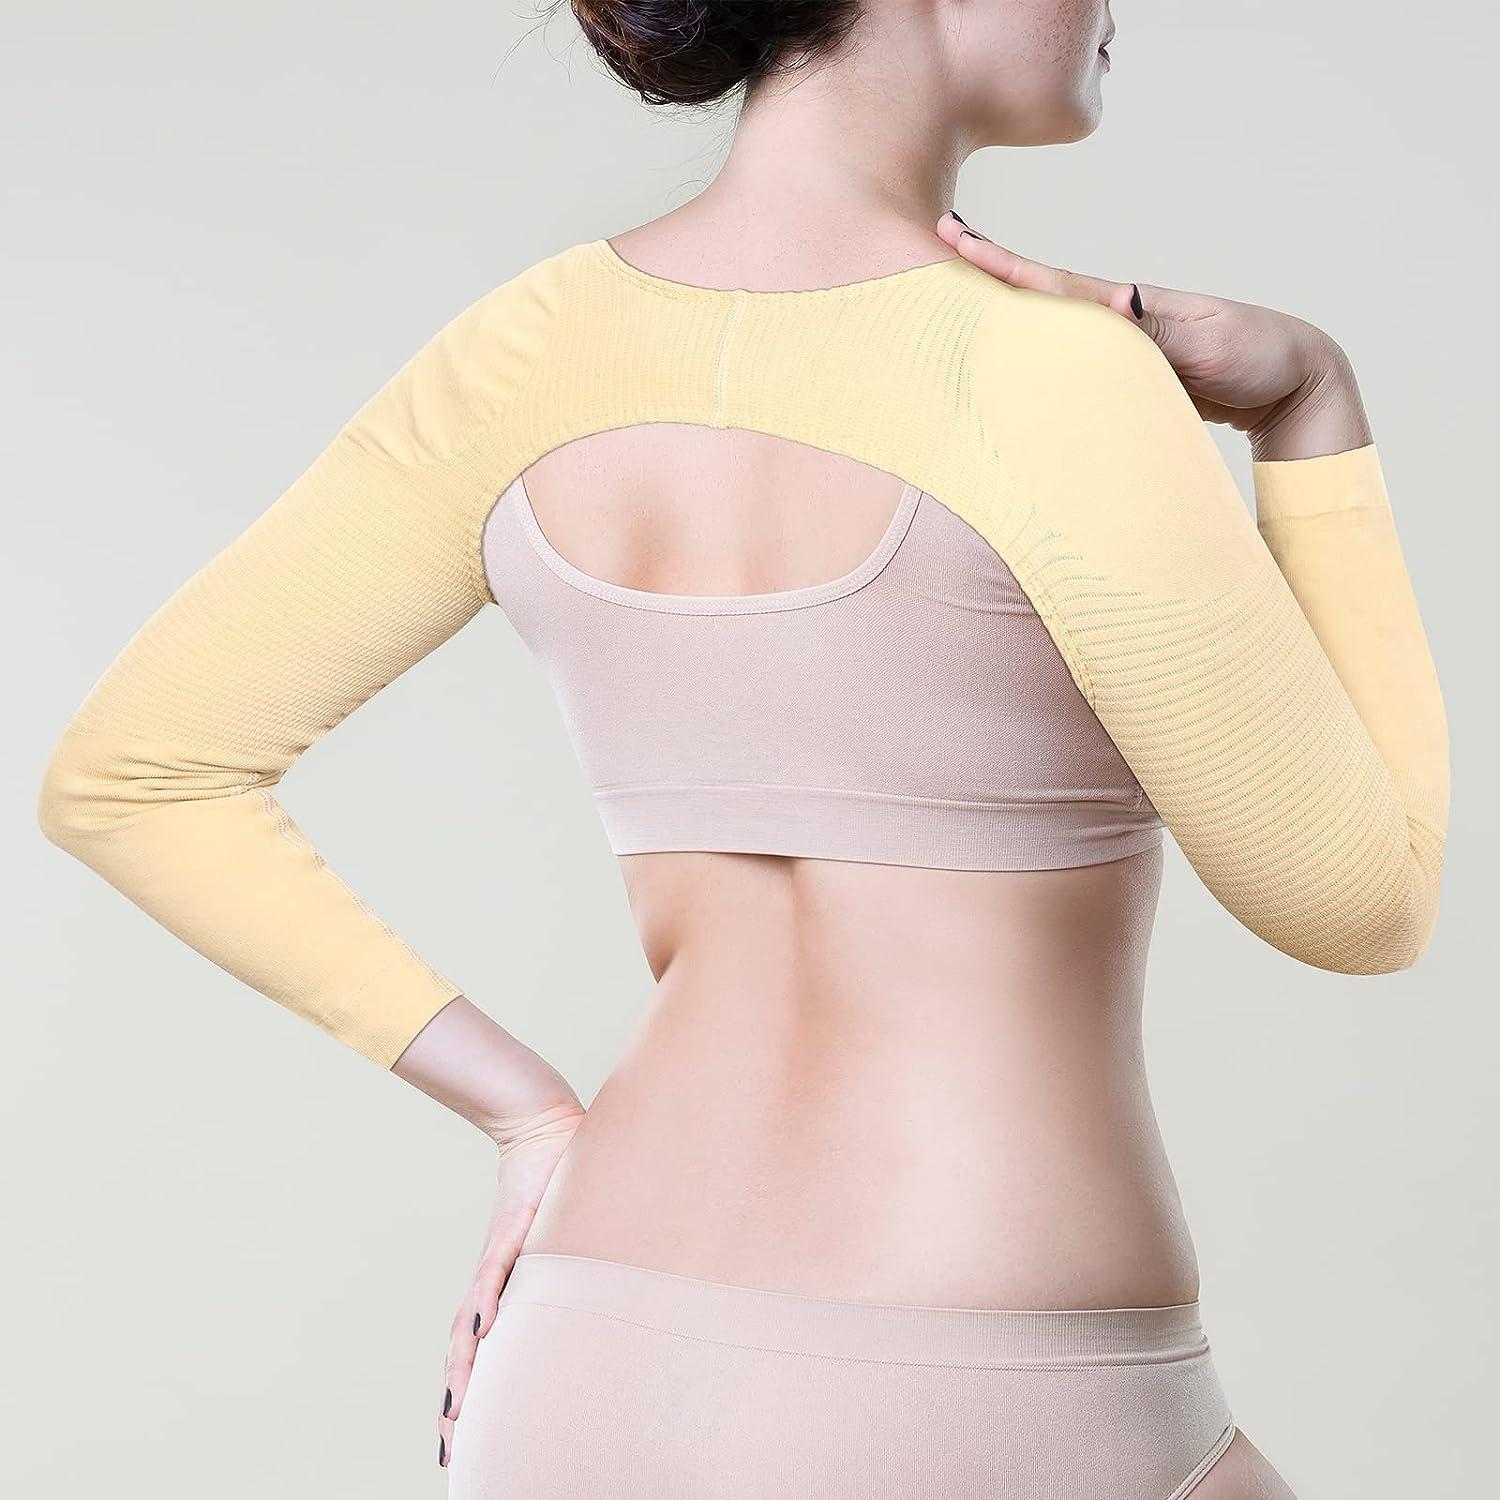 SHAPERIN Women Upper Arm Shaper Body Compression Sleeves Post